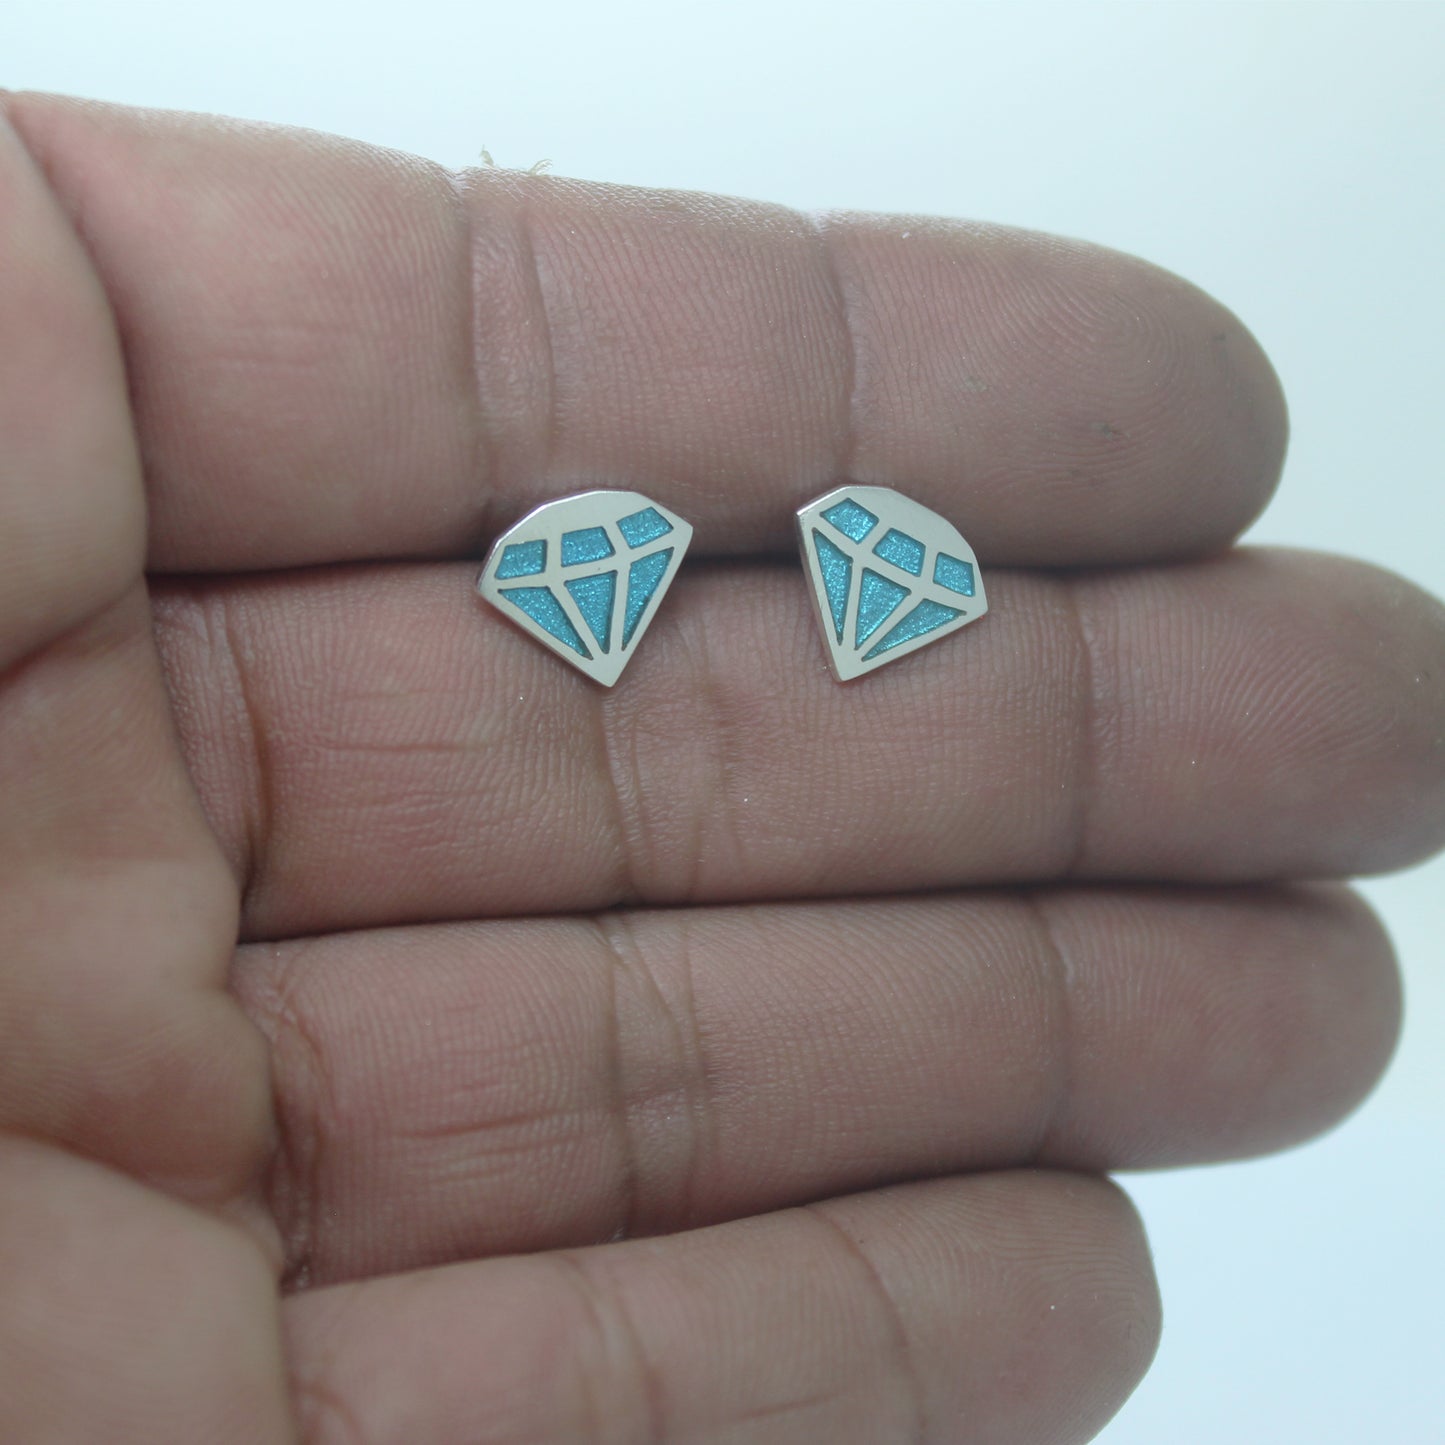 Blue diamonds earrings in 925 silver and UV resin